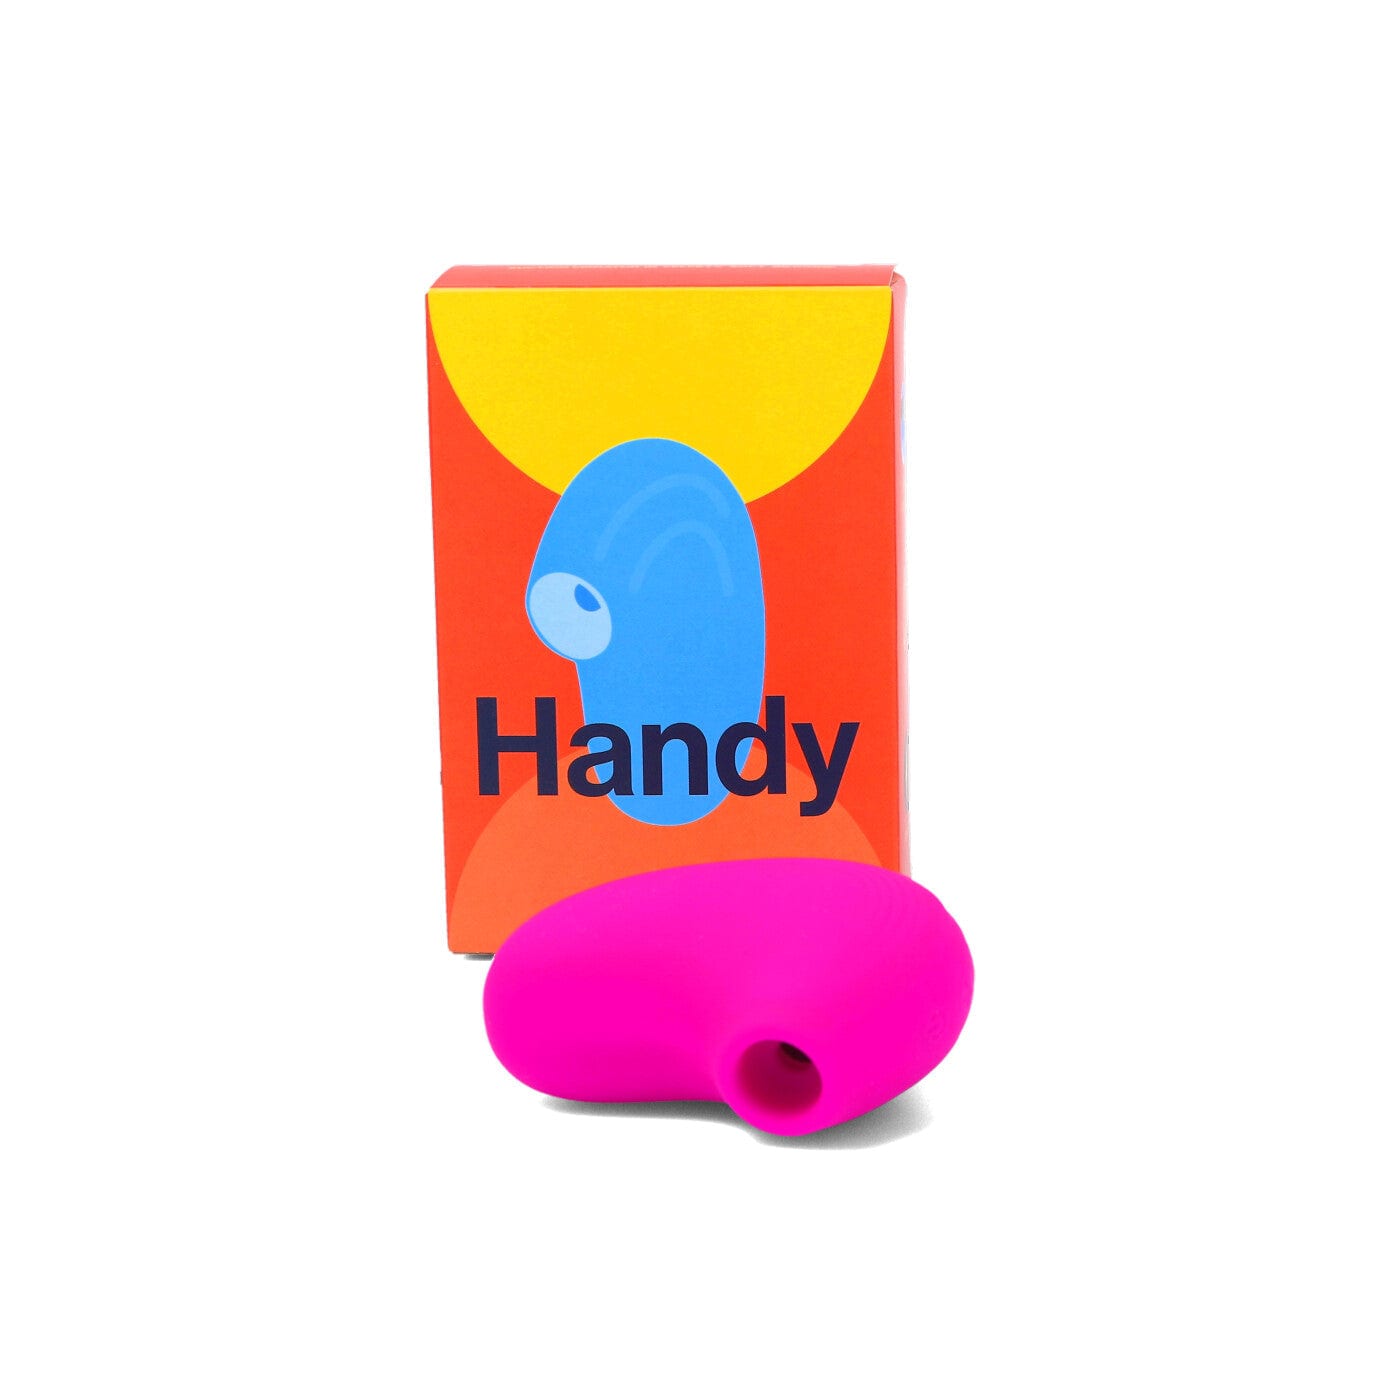 Handy fra peech - lille klitoris vakuum stimulator med pakke